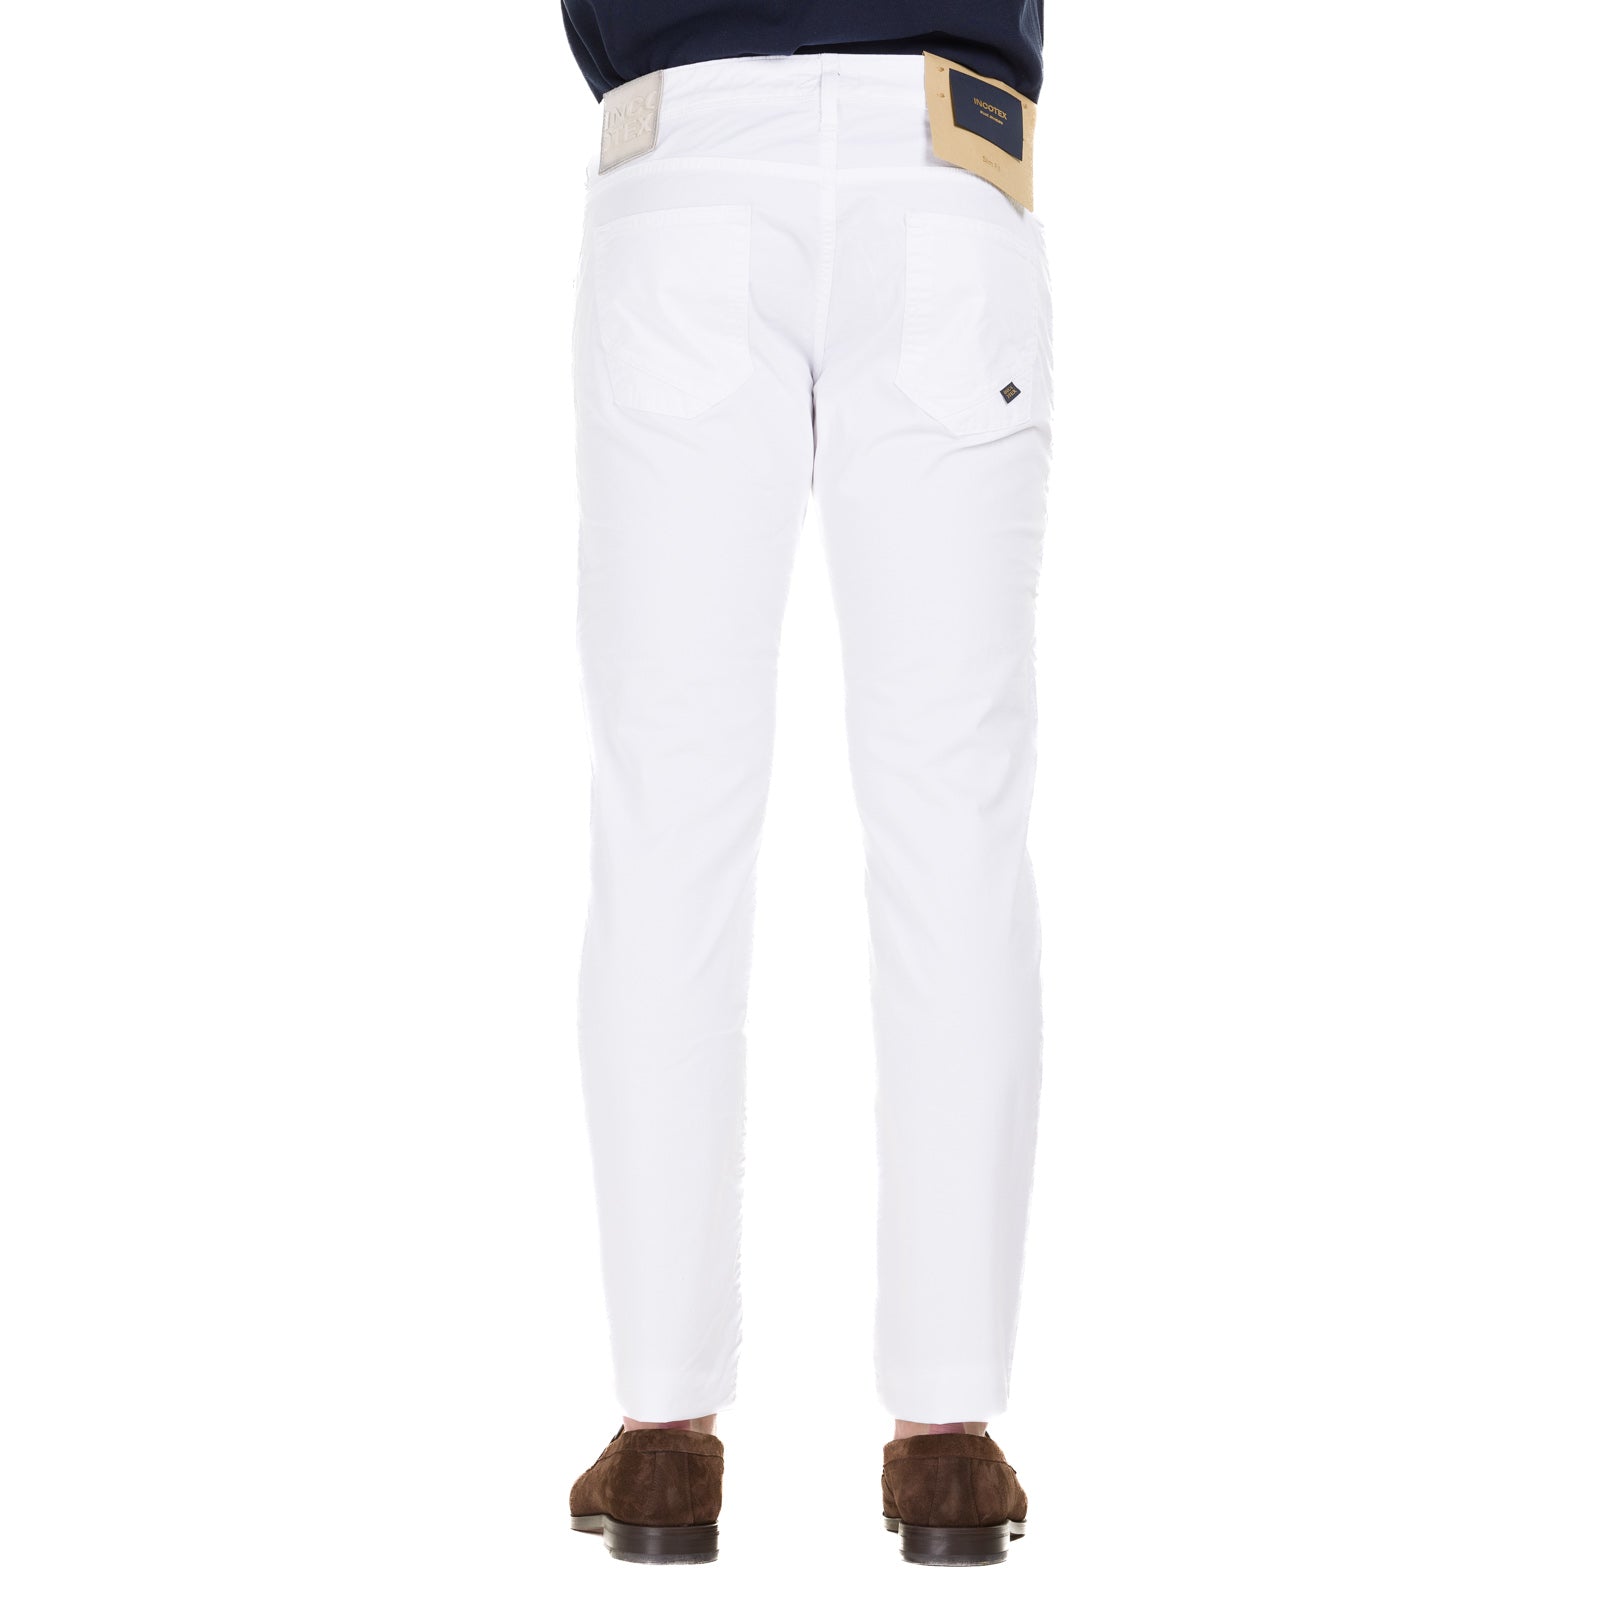 Pantalone INCOTEX 111 BDPS0002-06510 Bianco - Avant-gardeandria